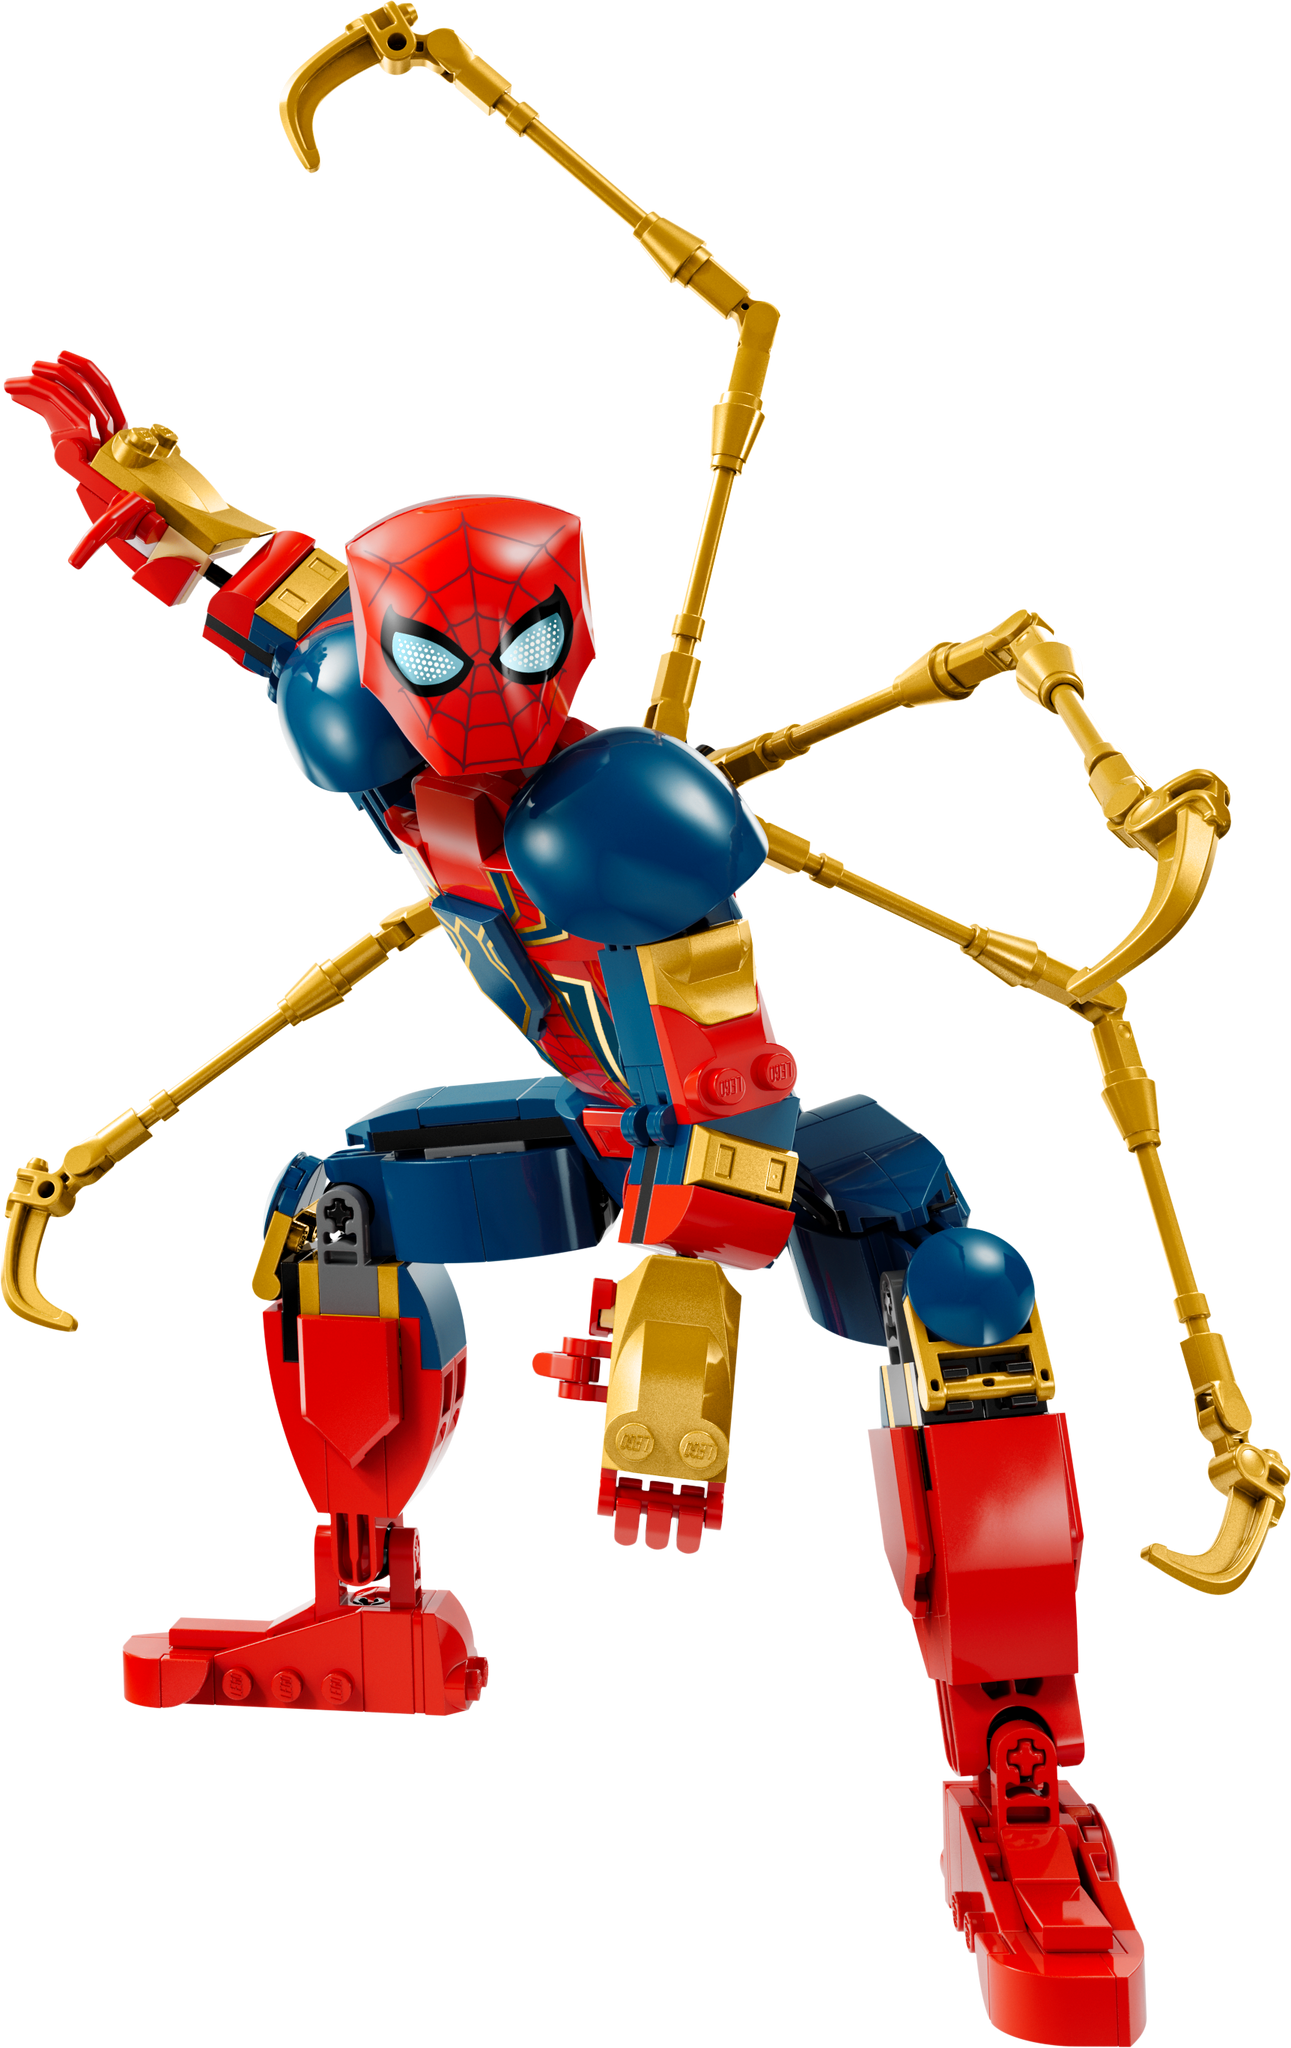 76298 Marvel Iron Spider-Man Construction Figure